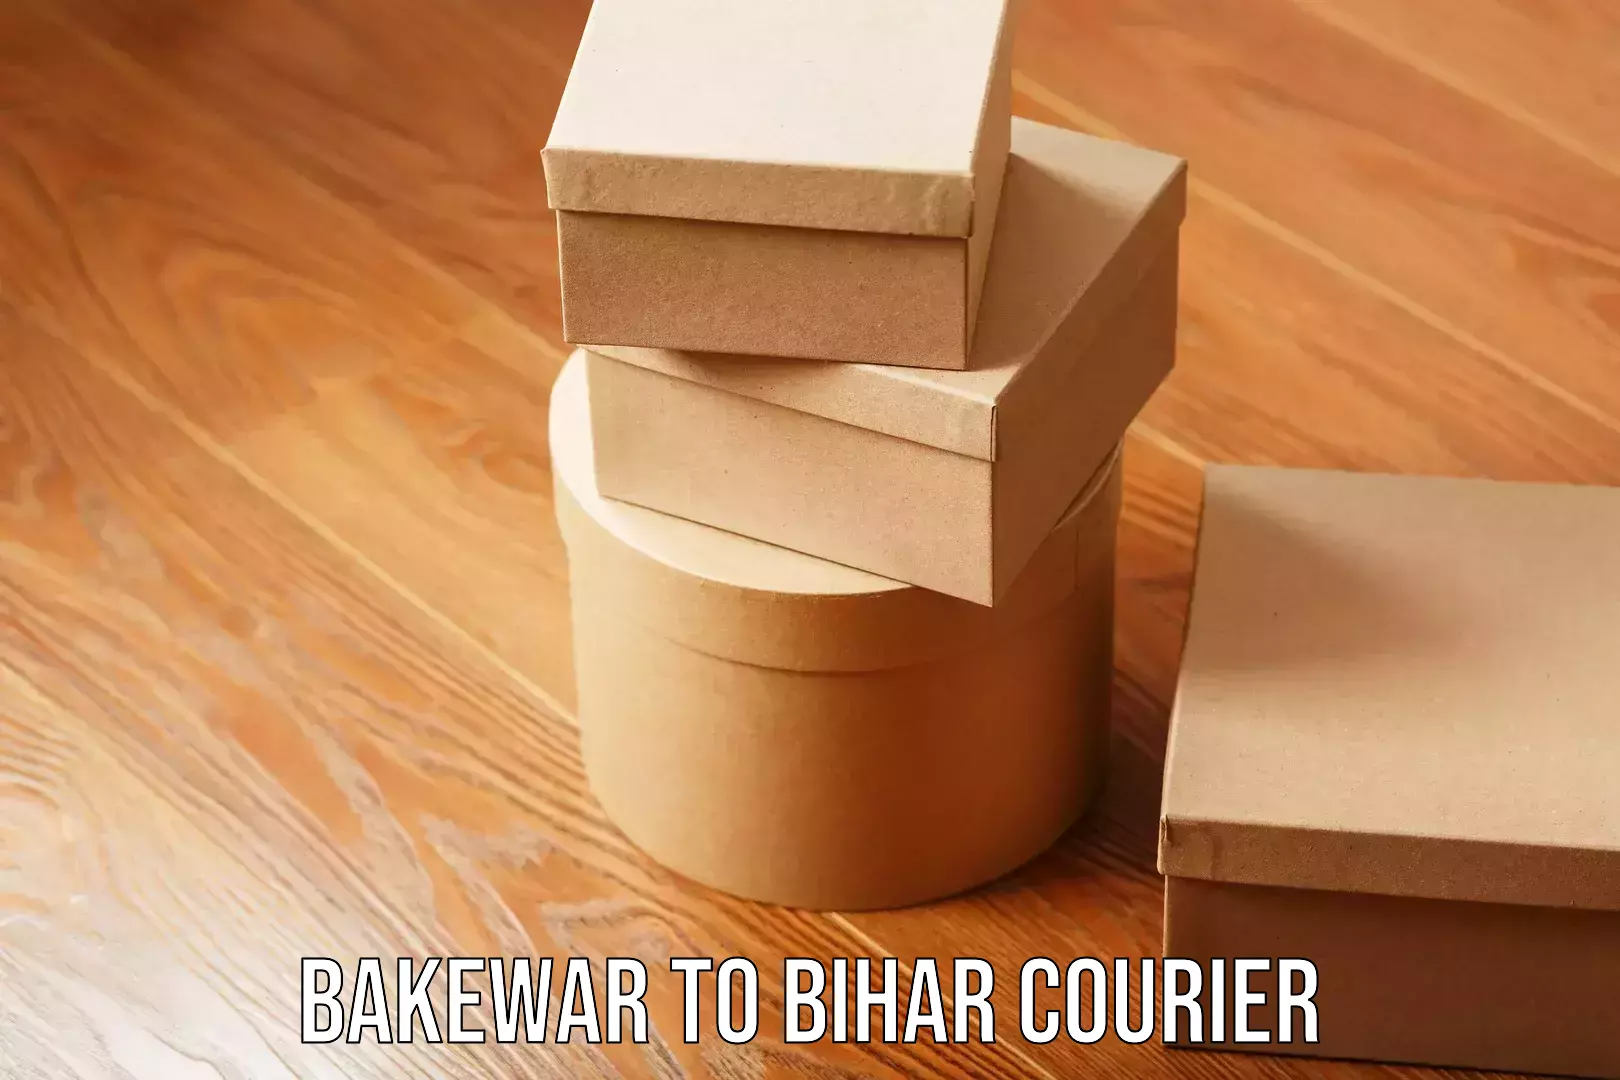 Next day courier Bakewar to Bihar